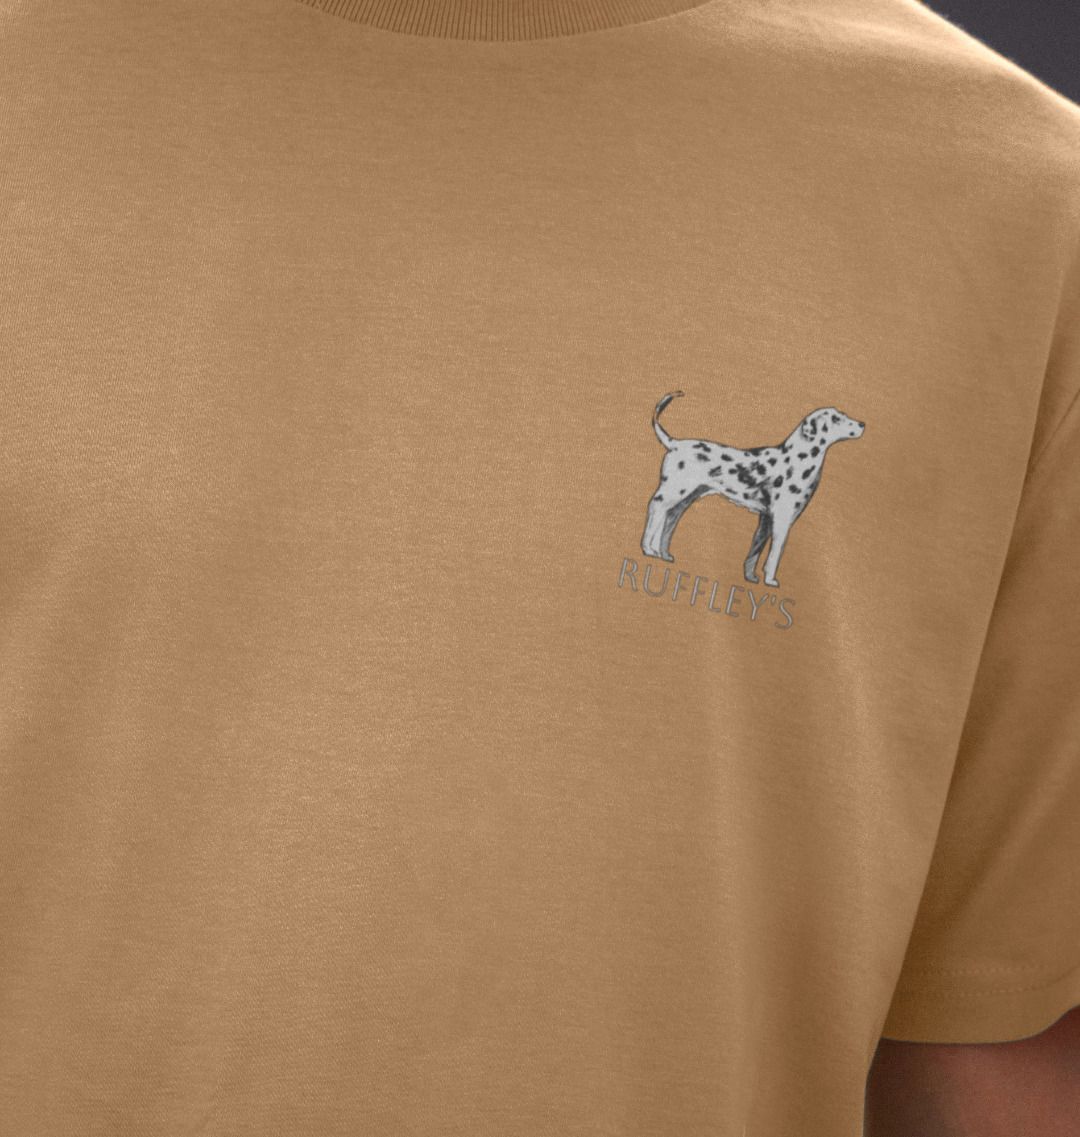 Dalmatian - Mens T-Shirt